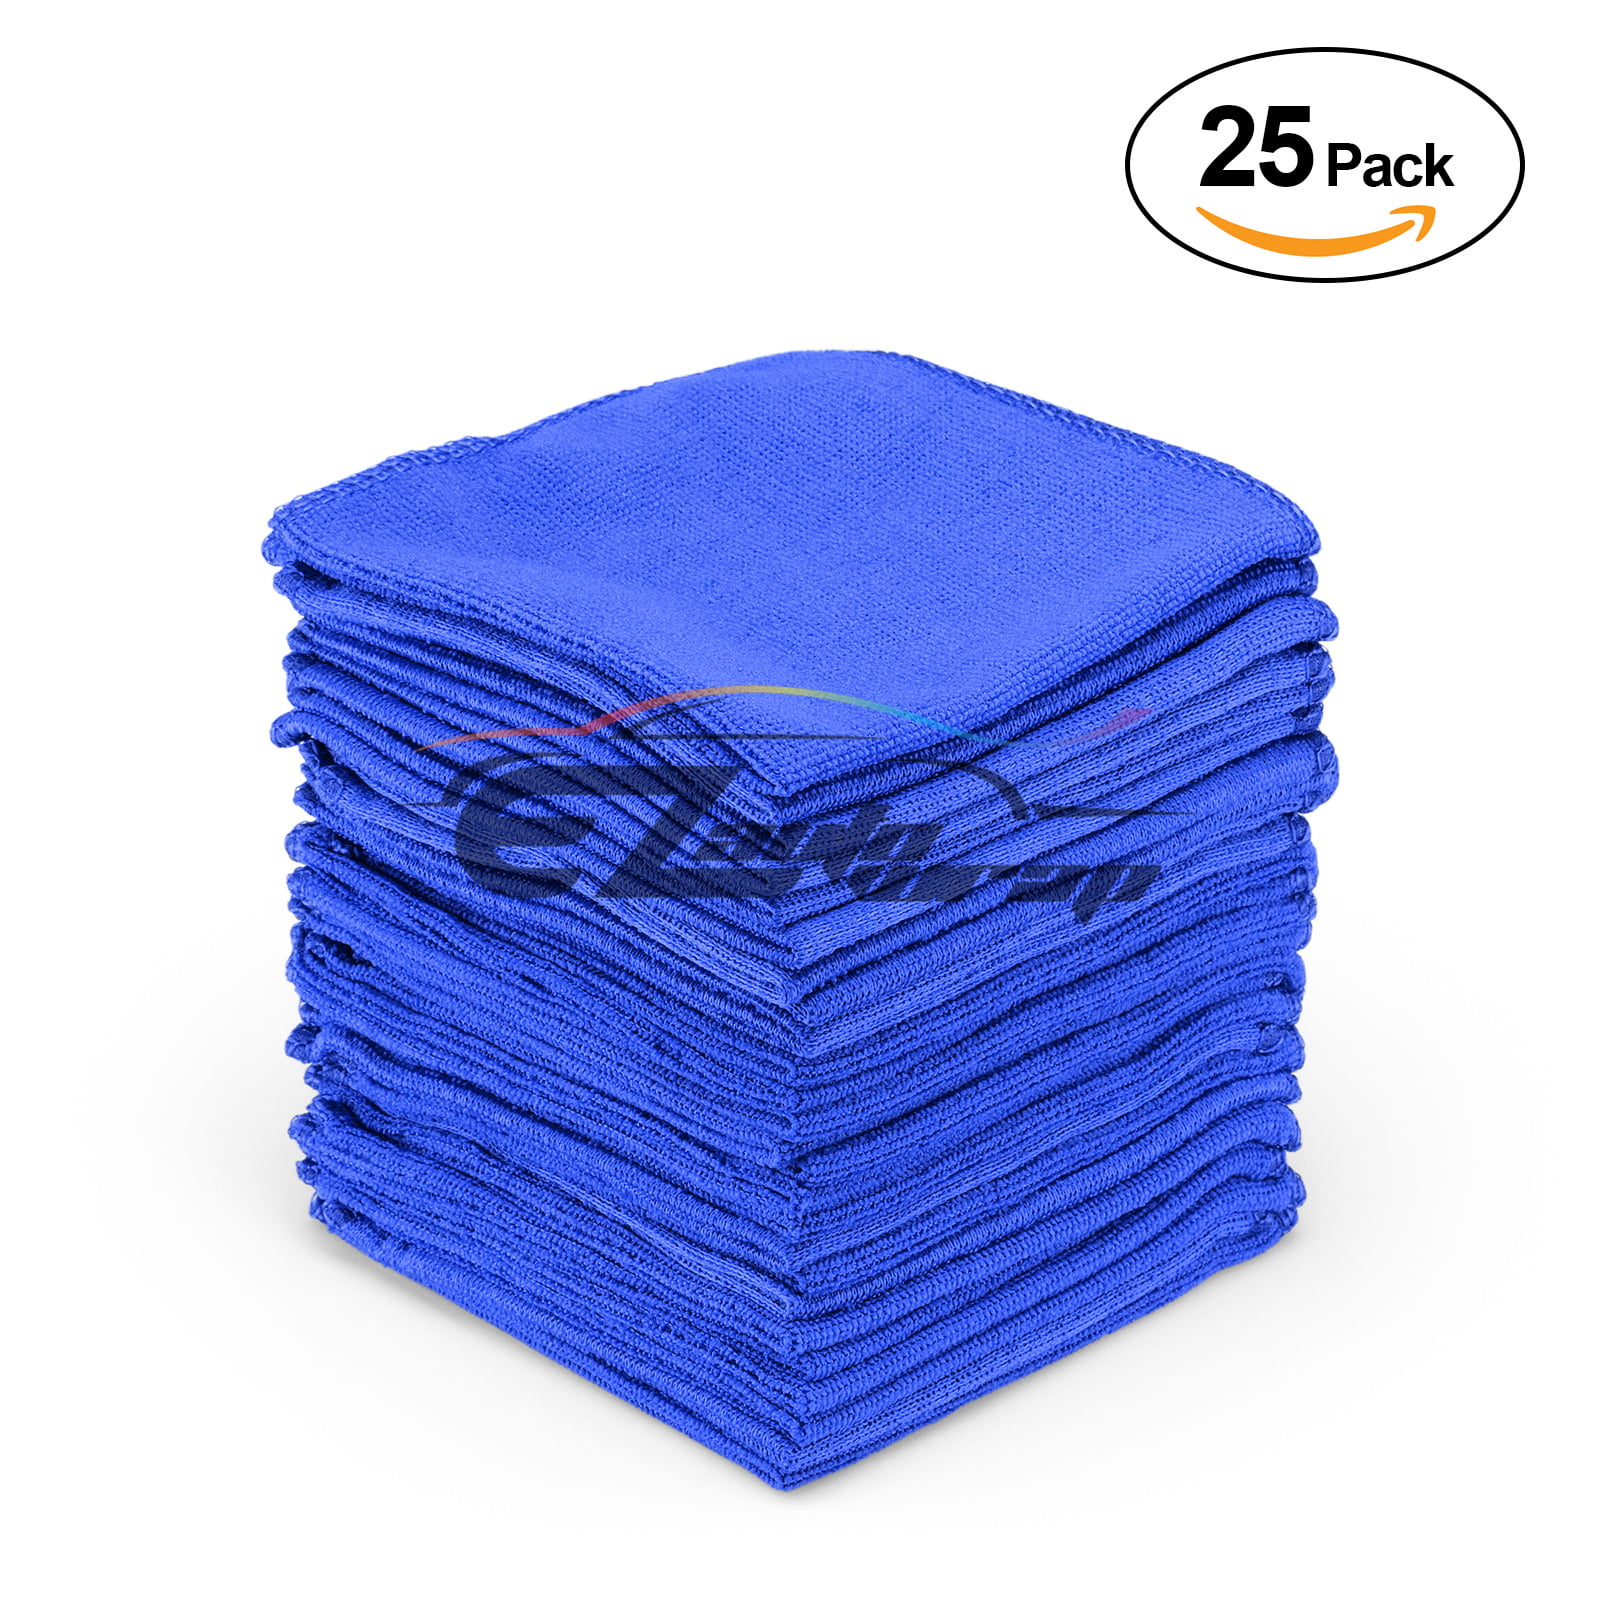 10 Pcs Microfiber Washcloth Auto Car Care Cleaning Towels Soft Cloths Green nEW 